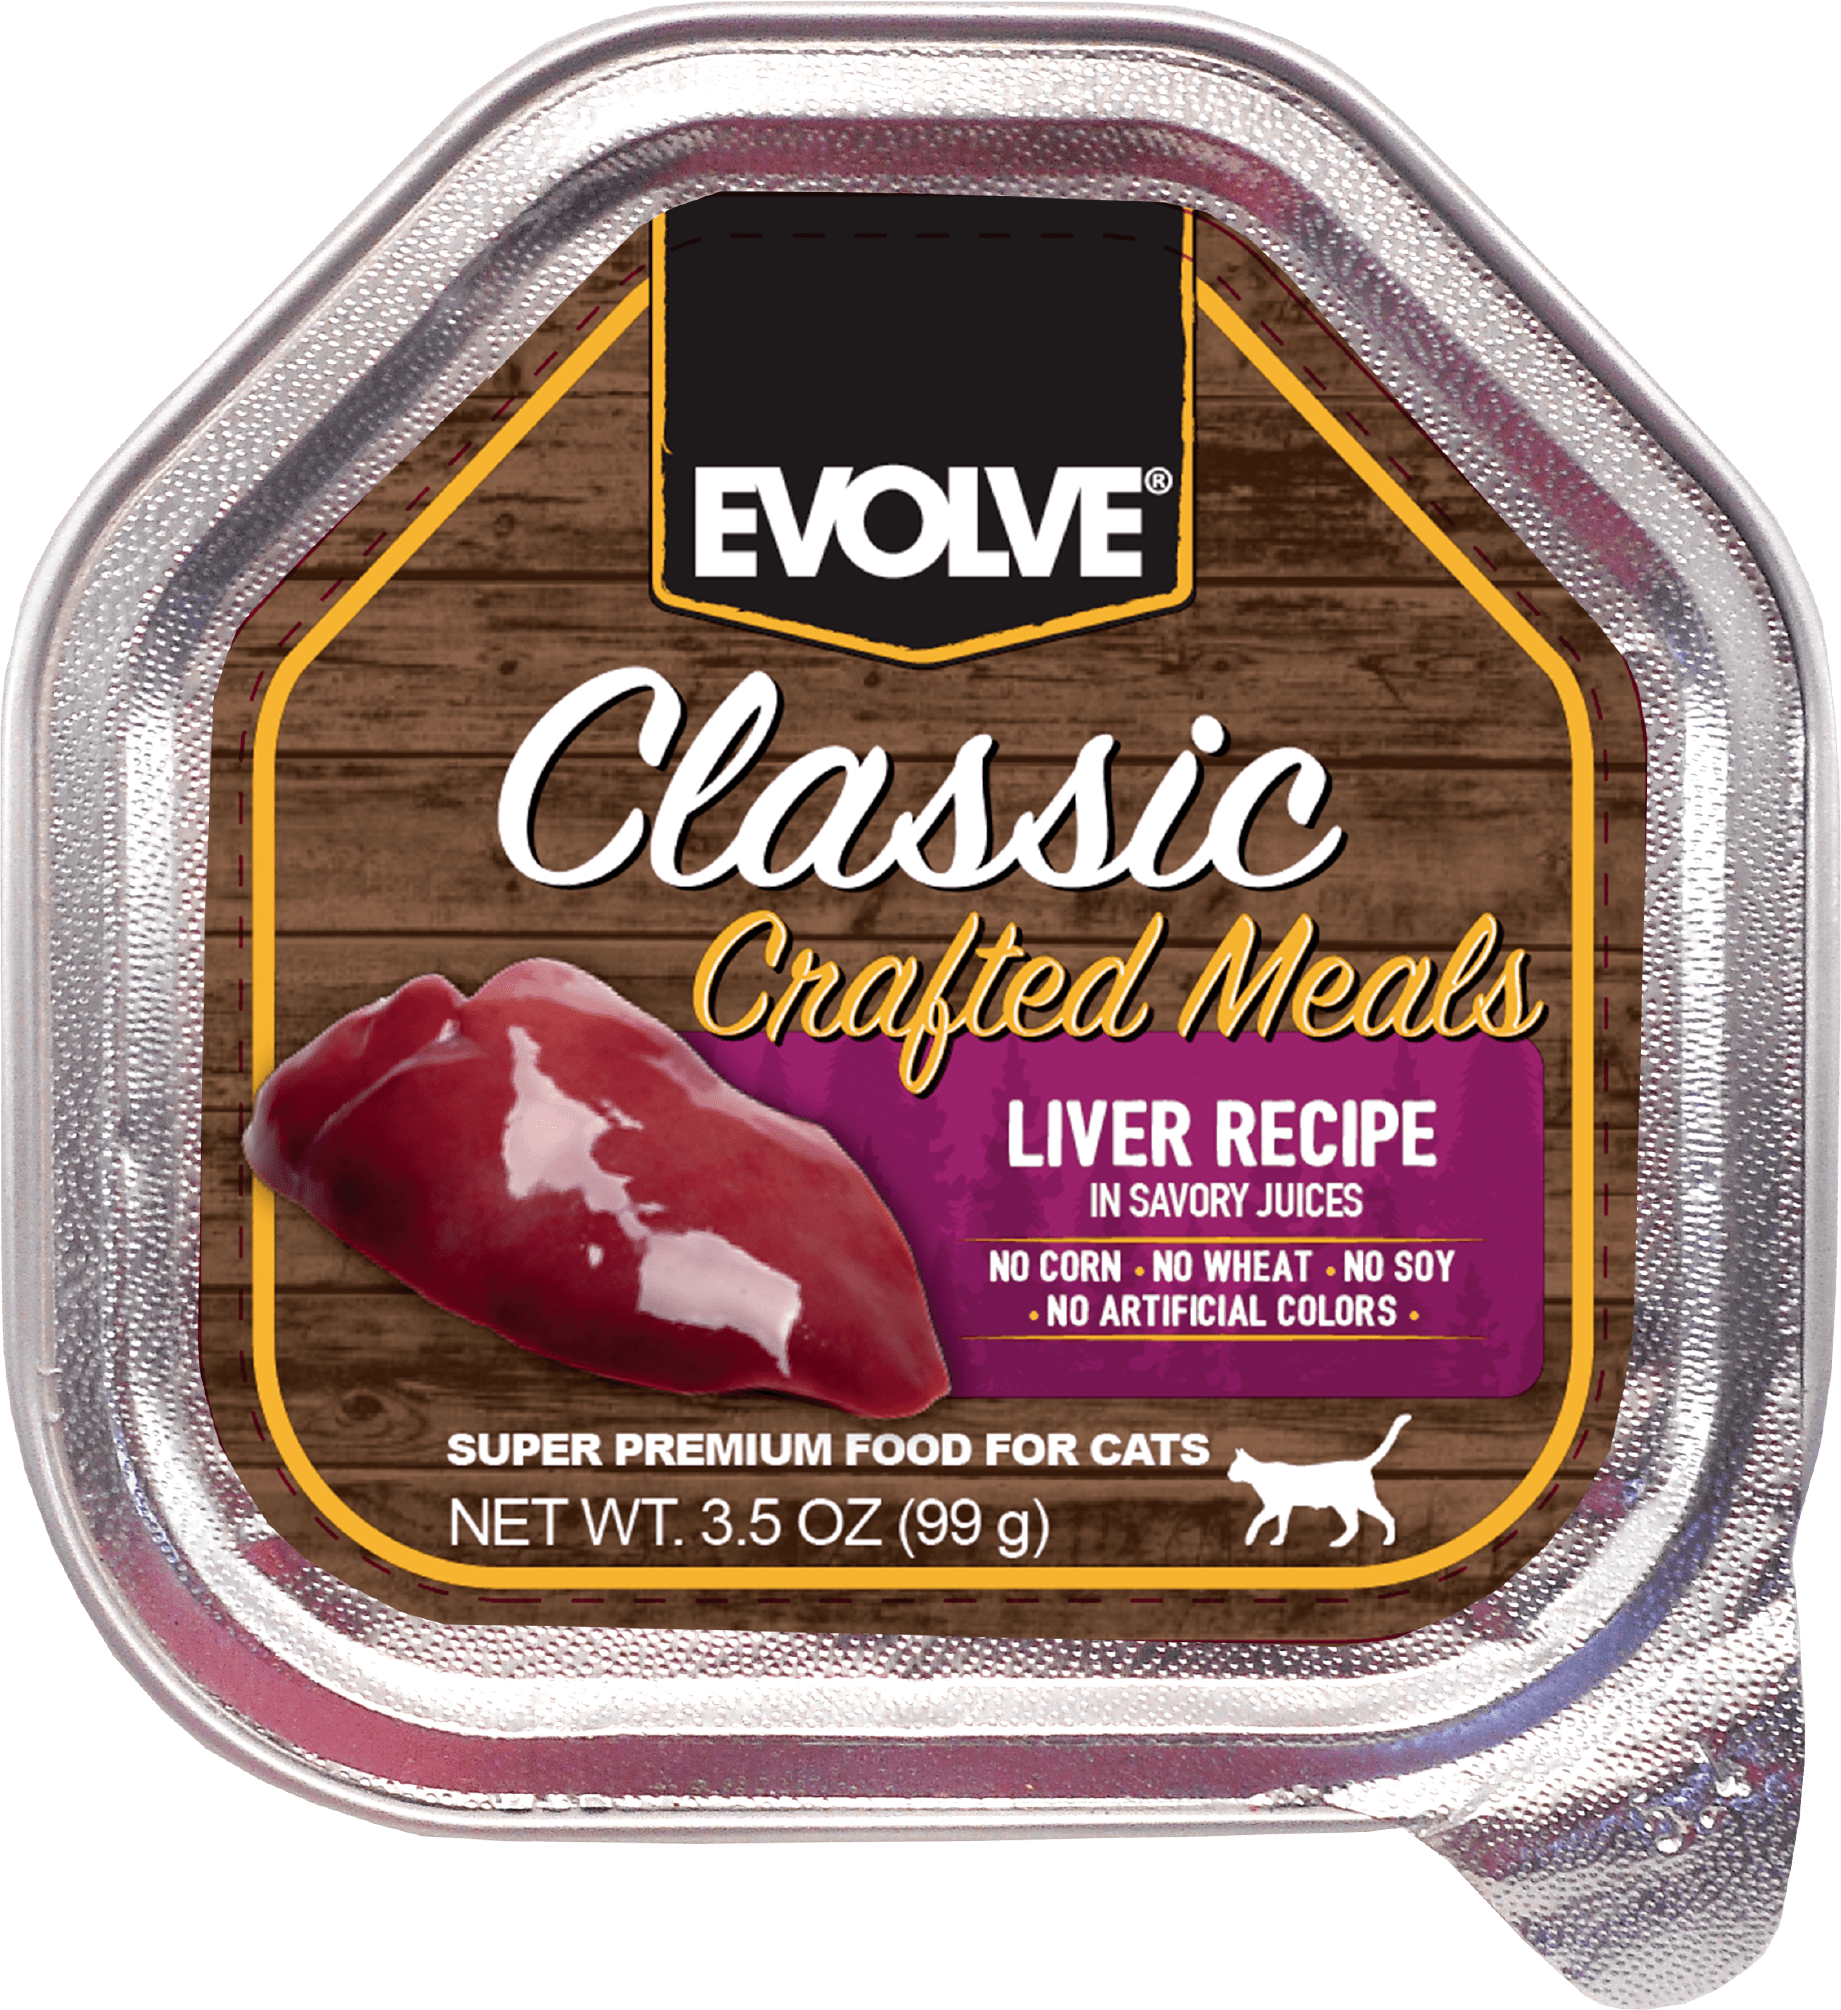 Evolve Classic Crafted Meals Liver Recipe